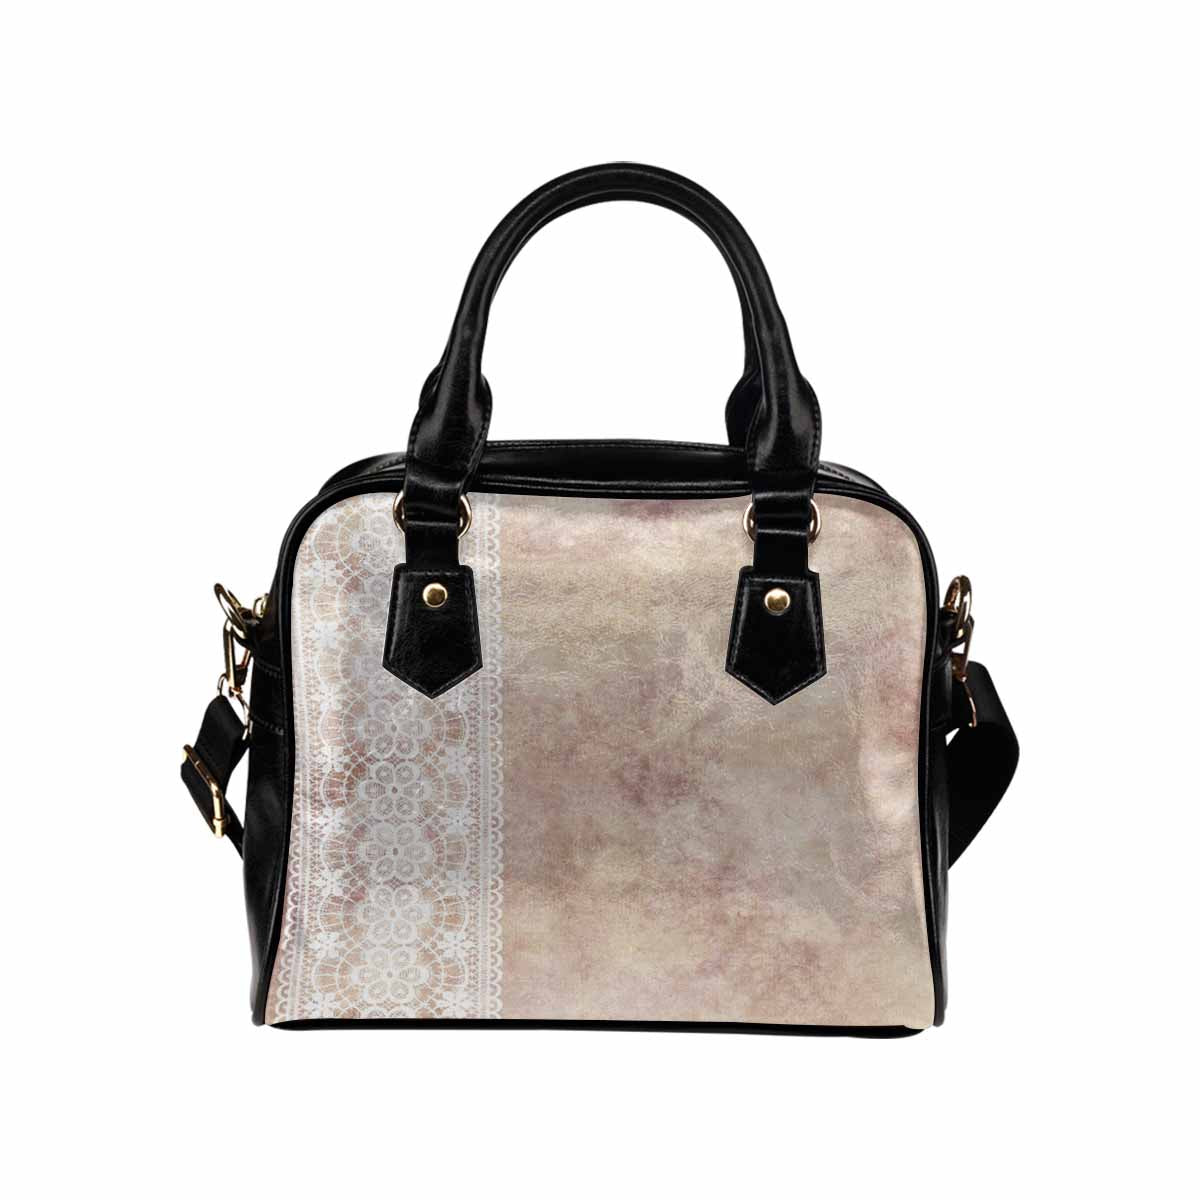 Victorian lace print, cute handbag, Mod 19163453, design 35